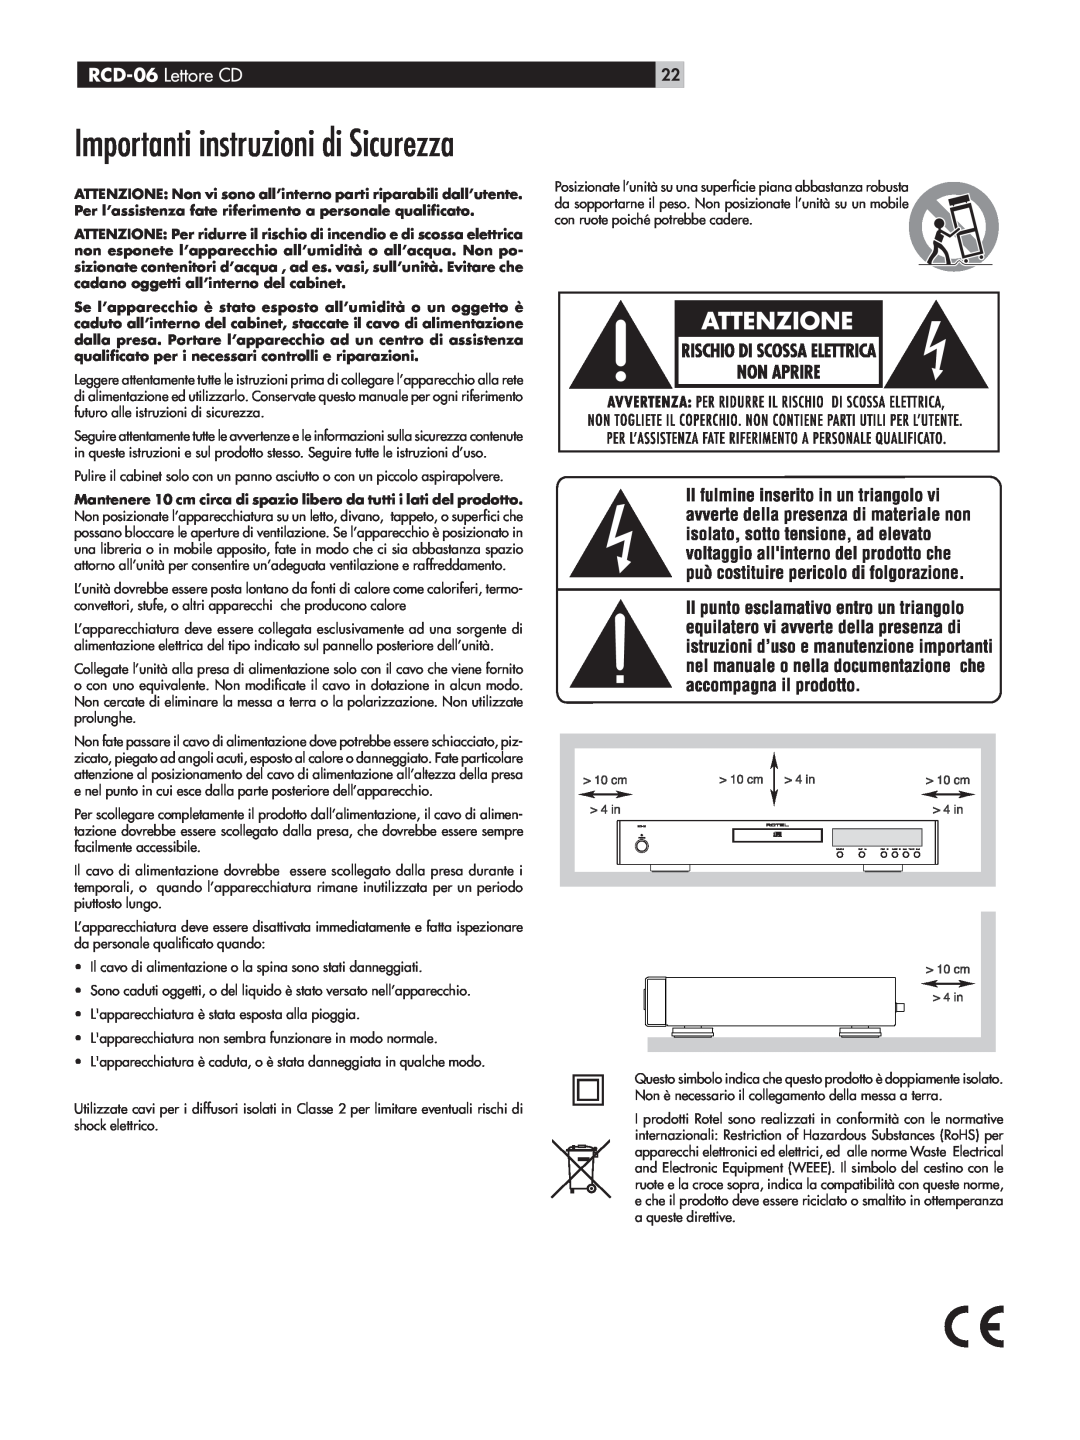 Rotel owner manual Importanti instruzioni di Sicurezza, RCD-06 Lettore CD 